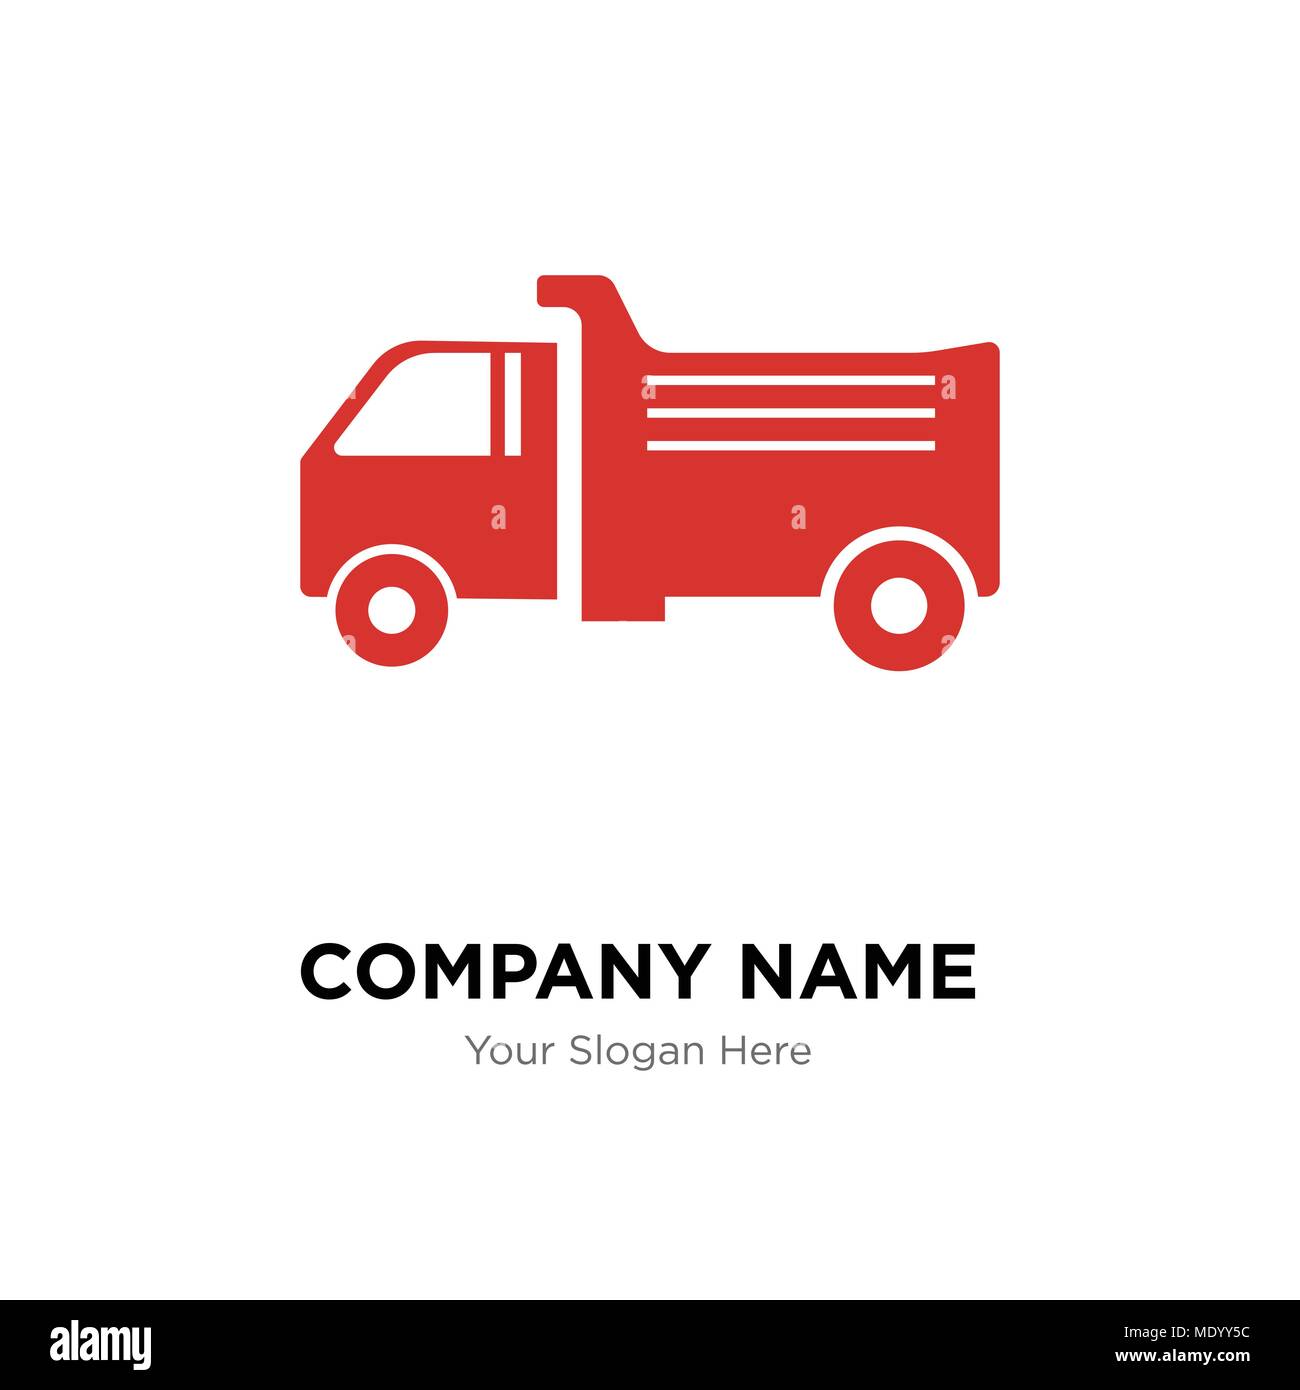 tractor company logo design template, Business corporate vector icon Stock Vector